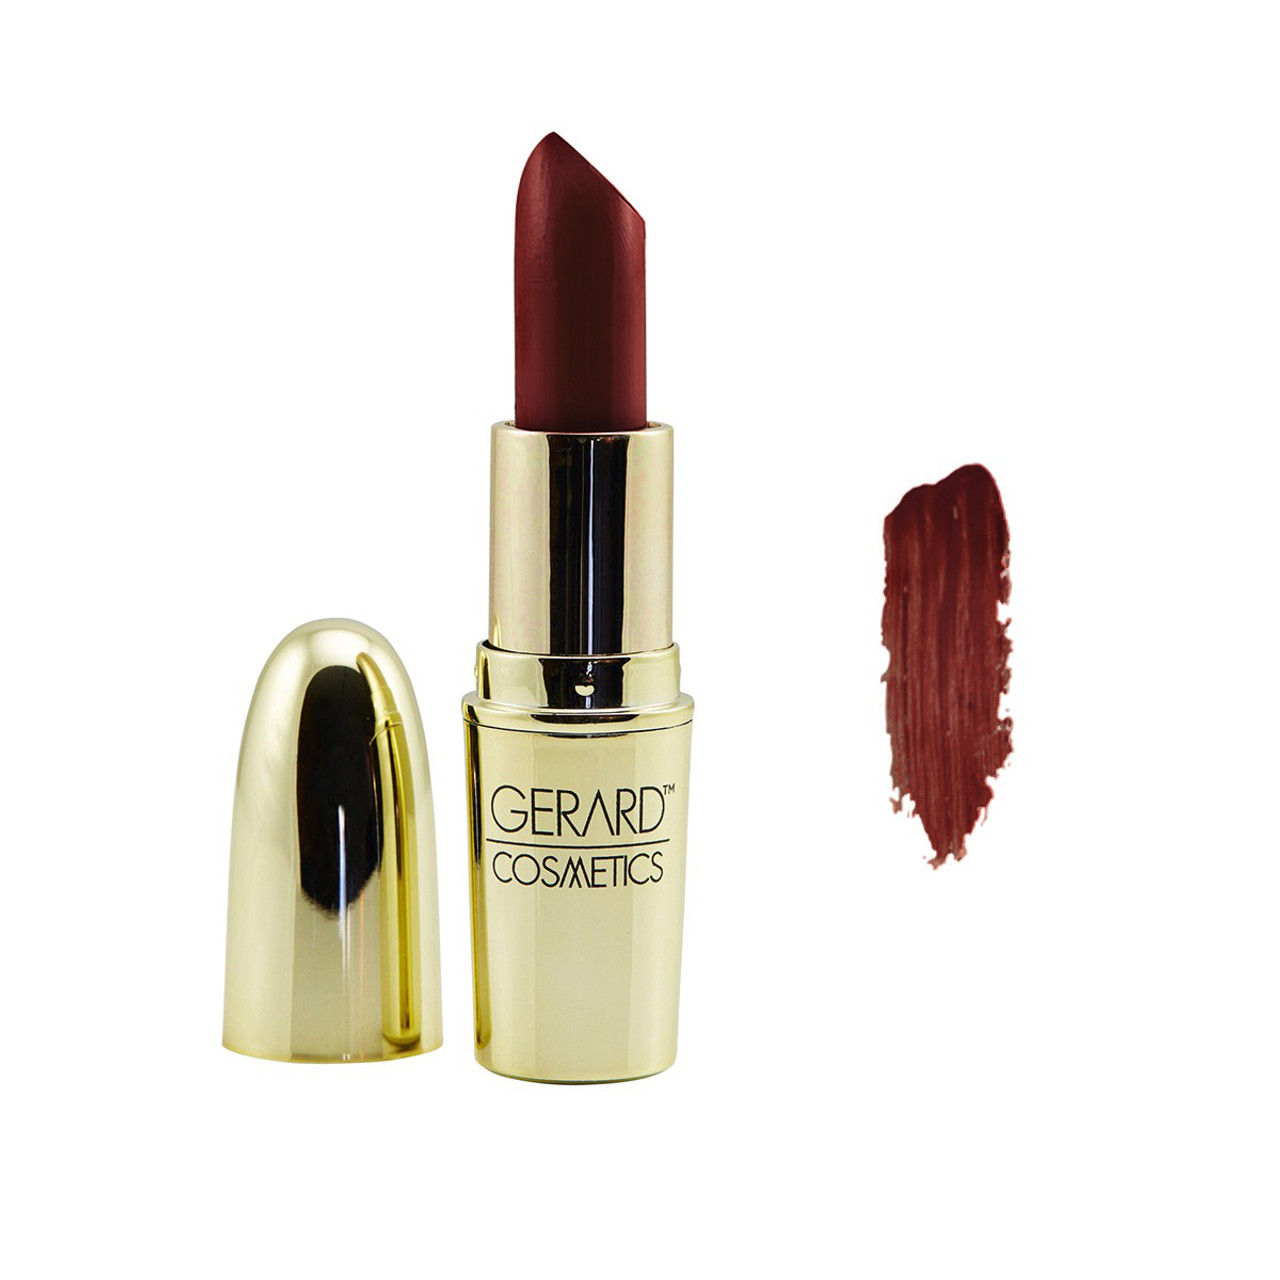 Gerard Cosmetics Lipstick – Merlot